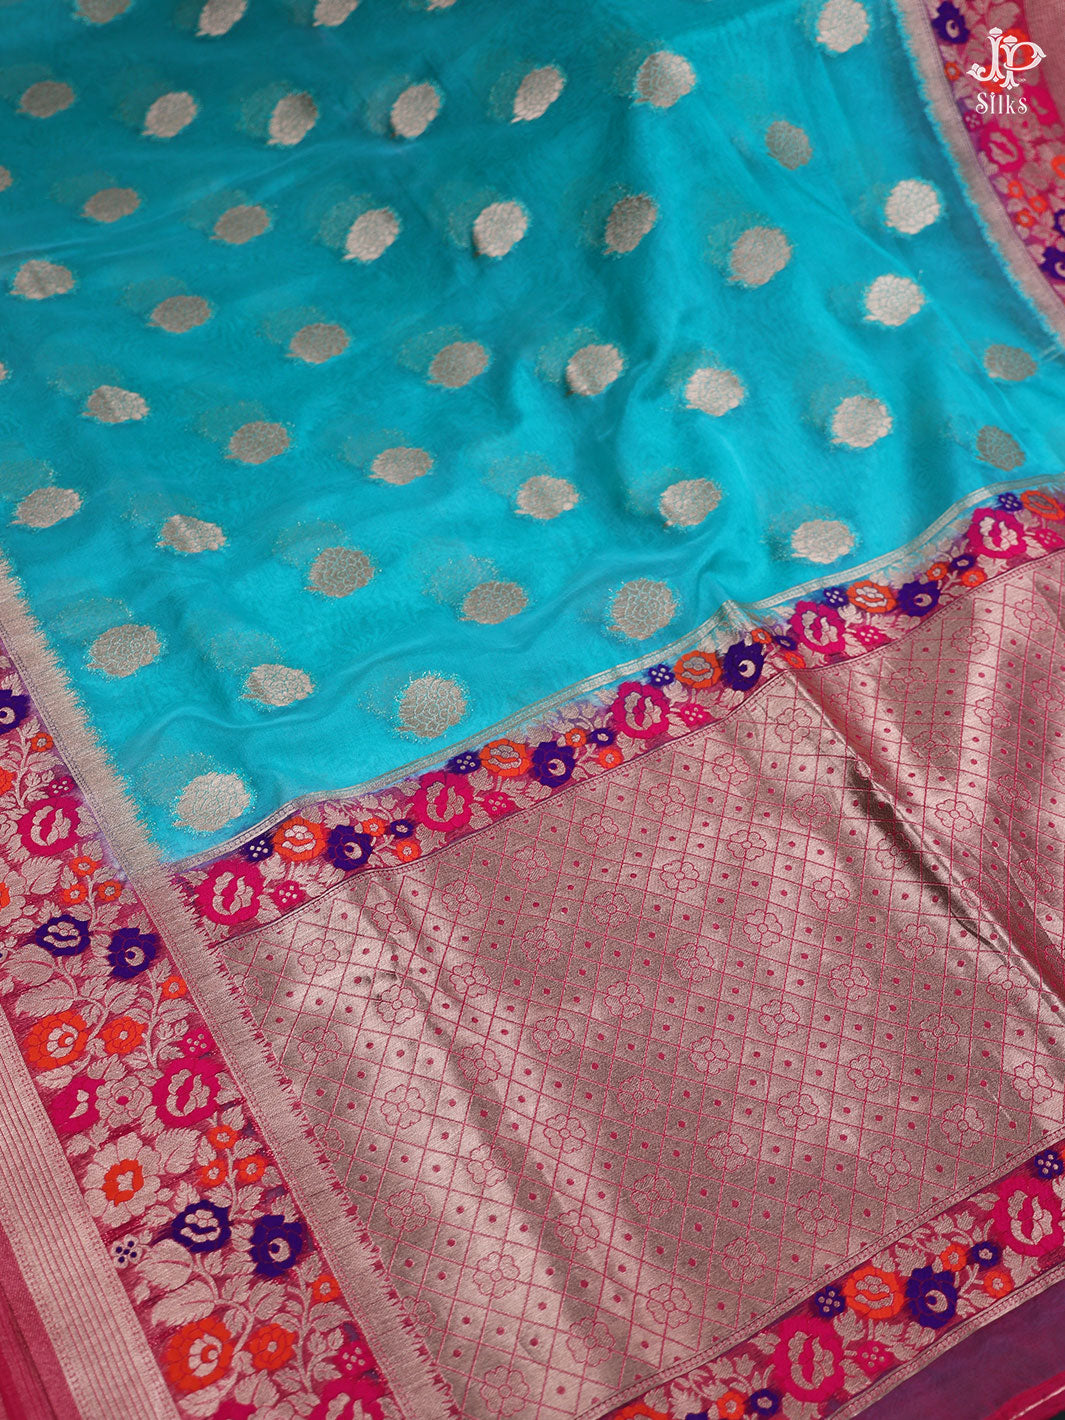 Teal Blue and Pink Organza Silk Saree - D7279 - View 4